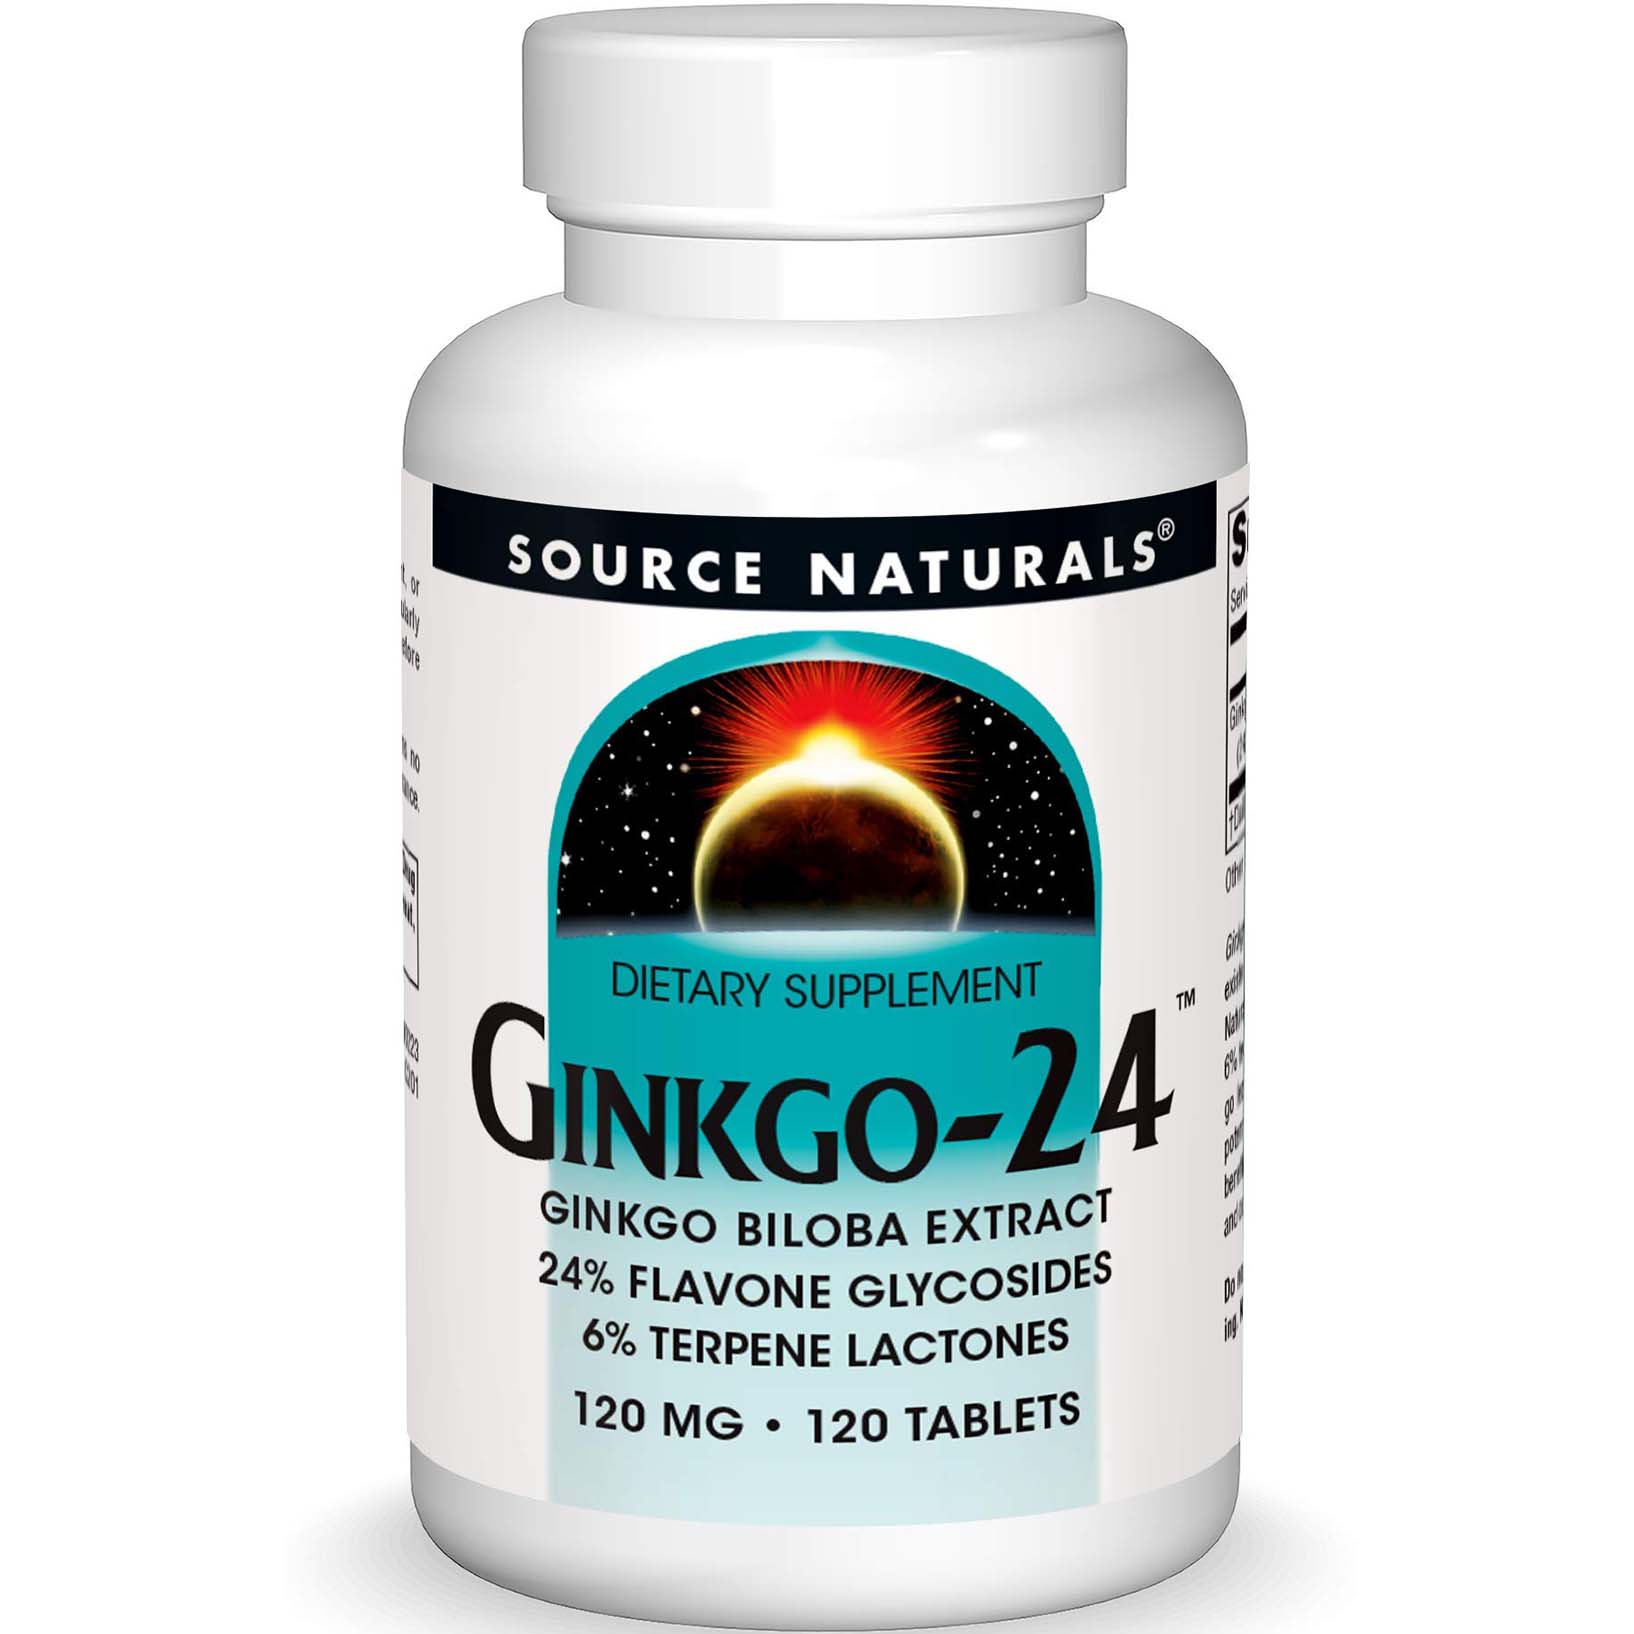 Source Naturals Ginkgo 24 Biloba, 120 mg, 120 Tablets